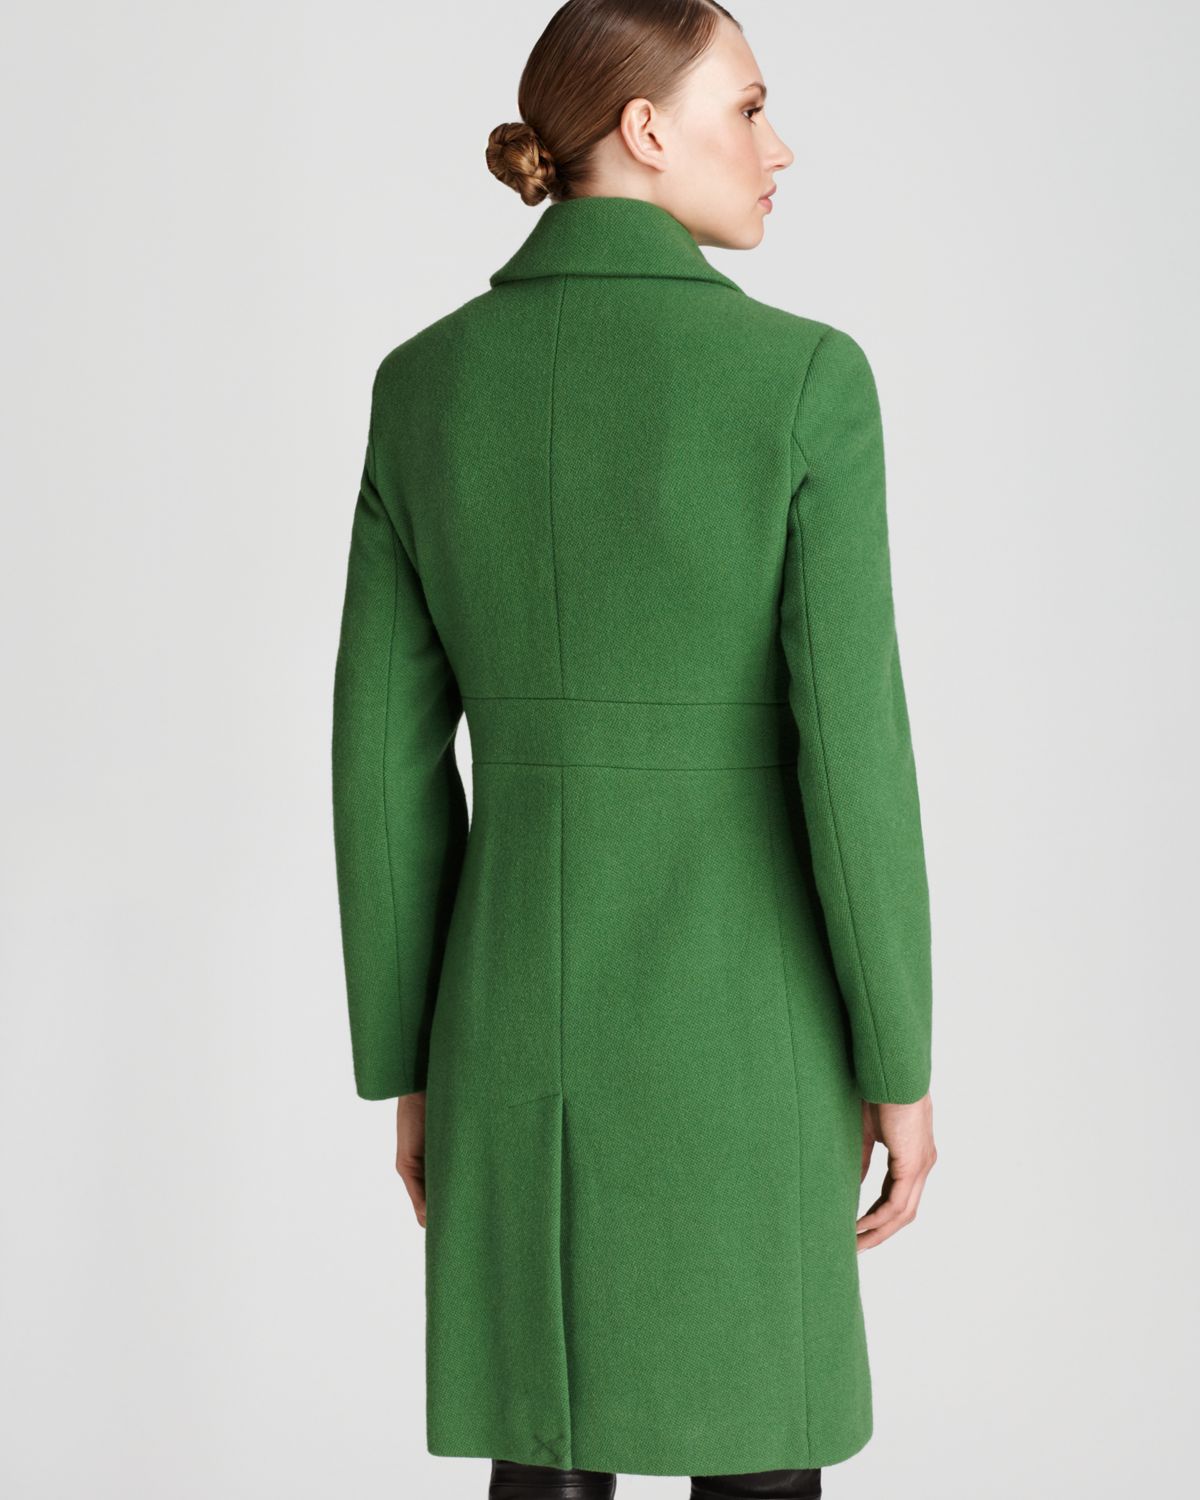 سيرينا بلميل بشكل صحيح calvin klein green coat - translucent-network.org